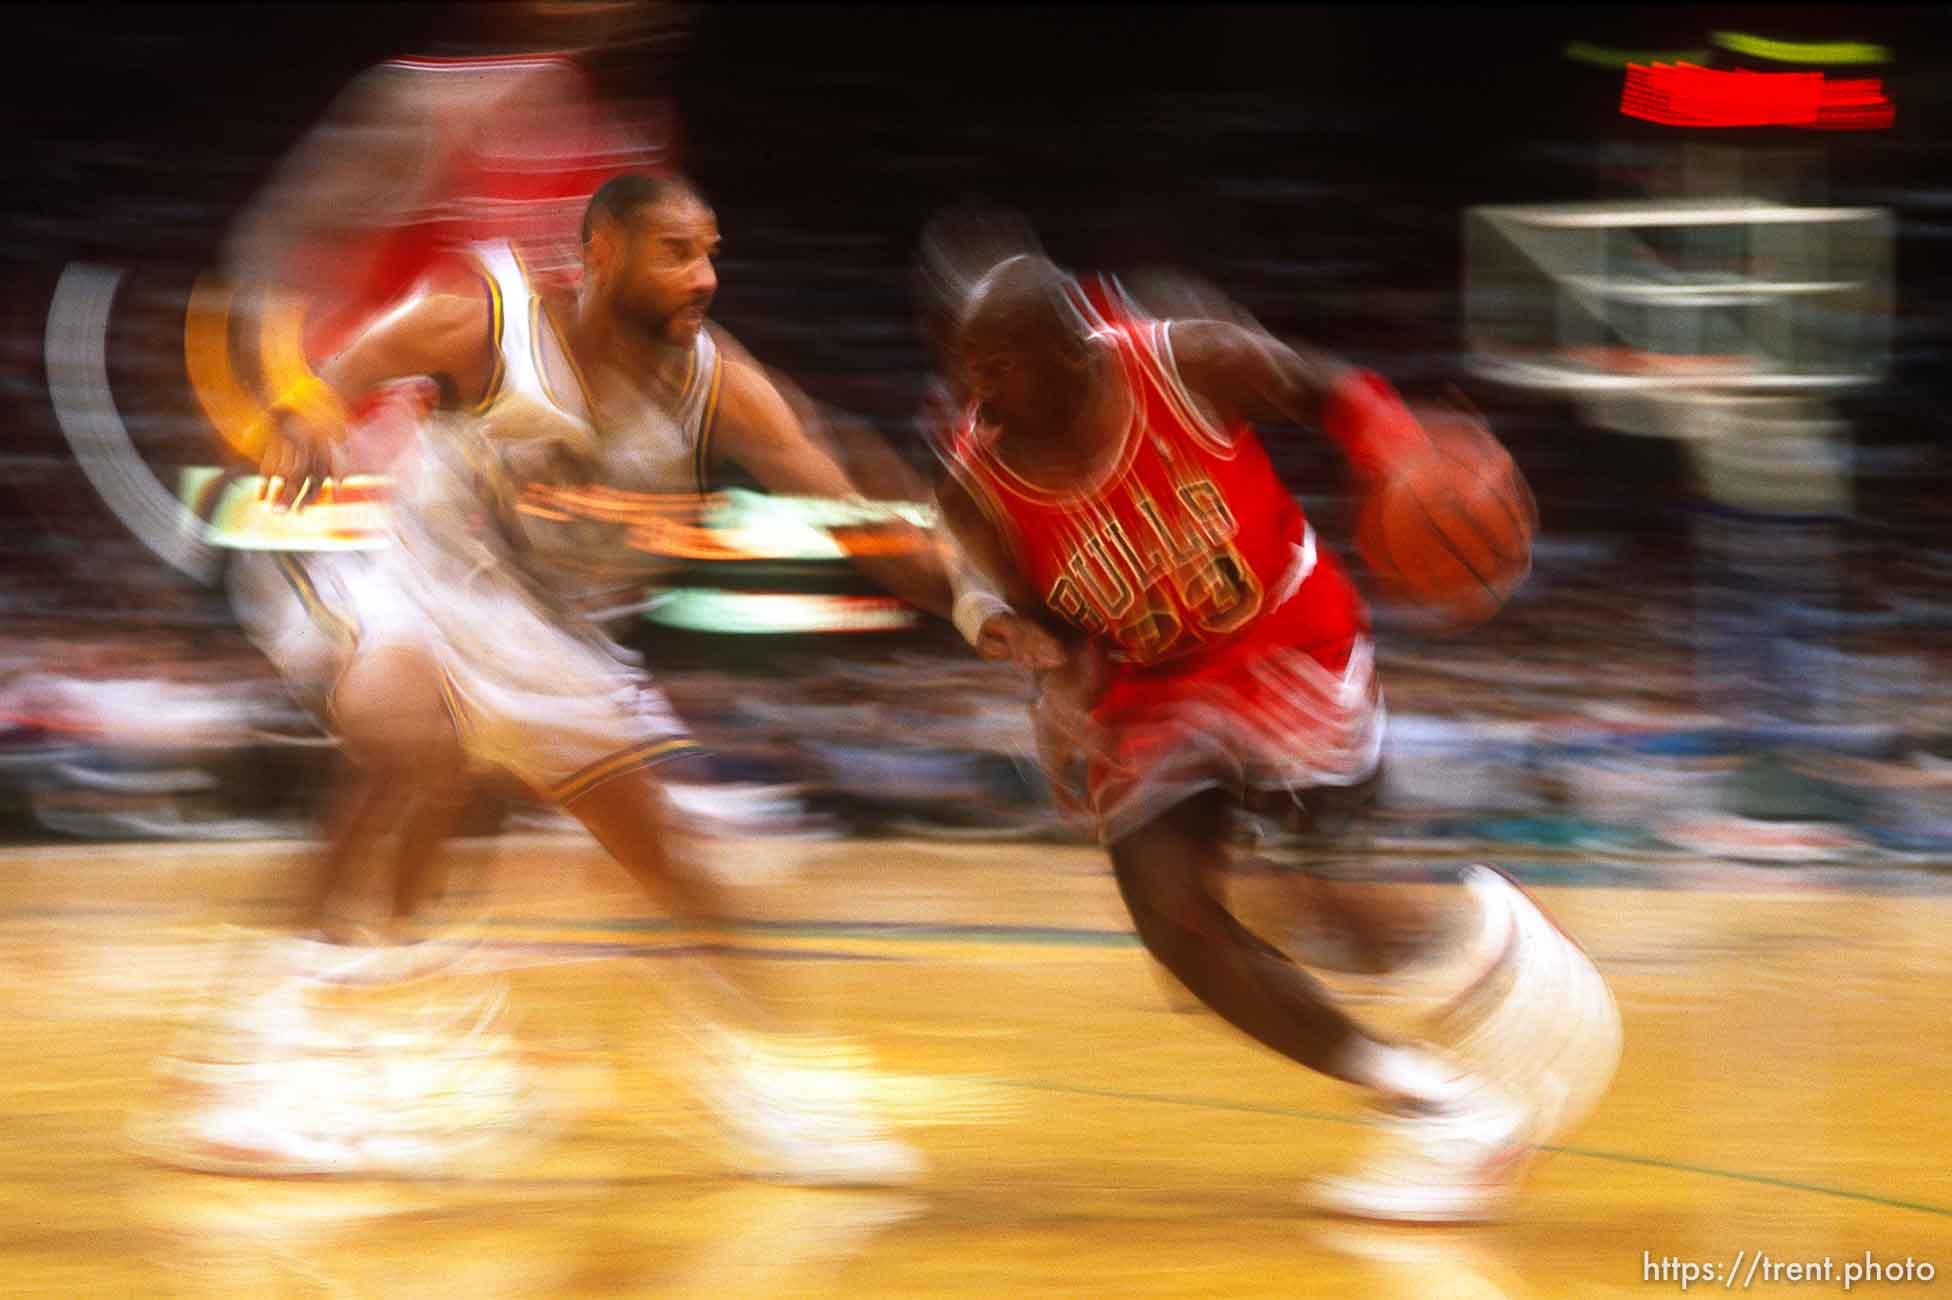 Michael Jordan drives at Utah Jazz vs. Chicago Bulls. slow shutter